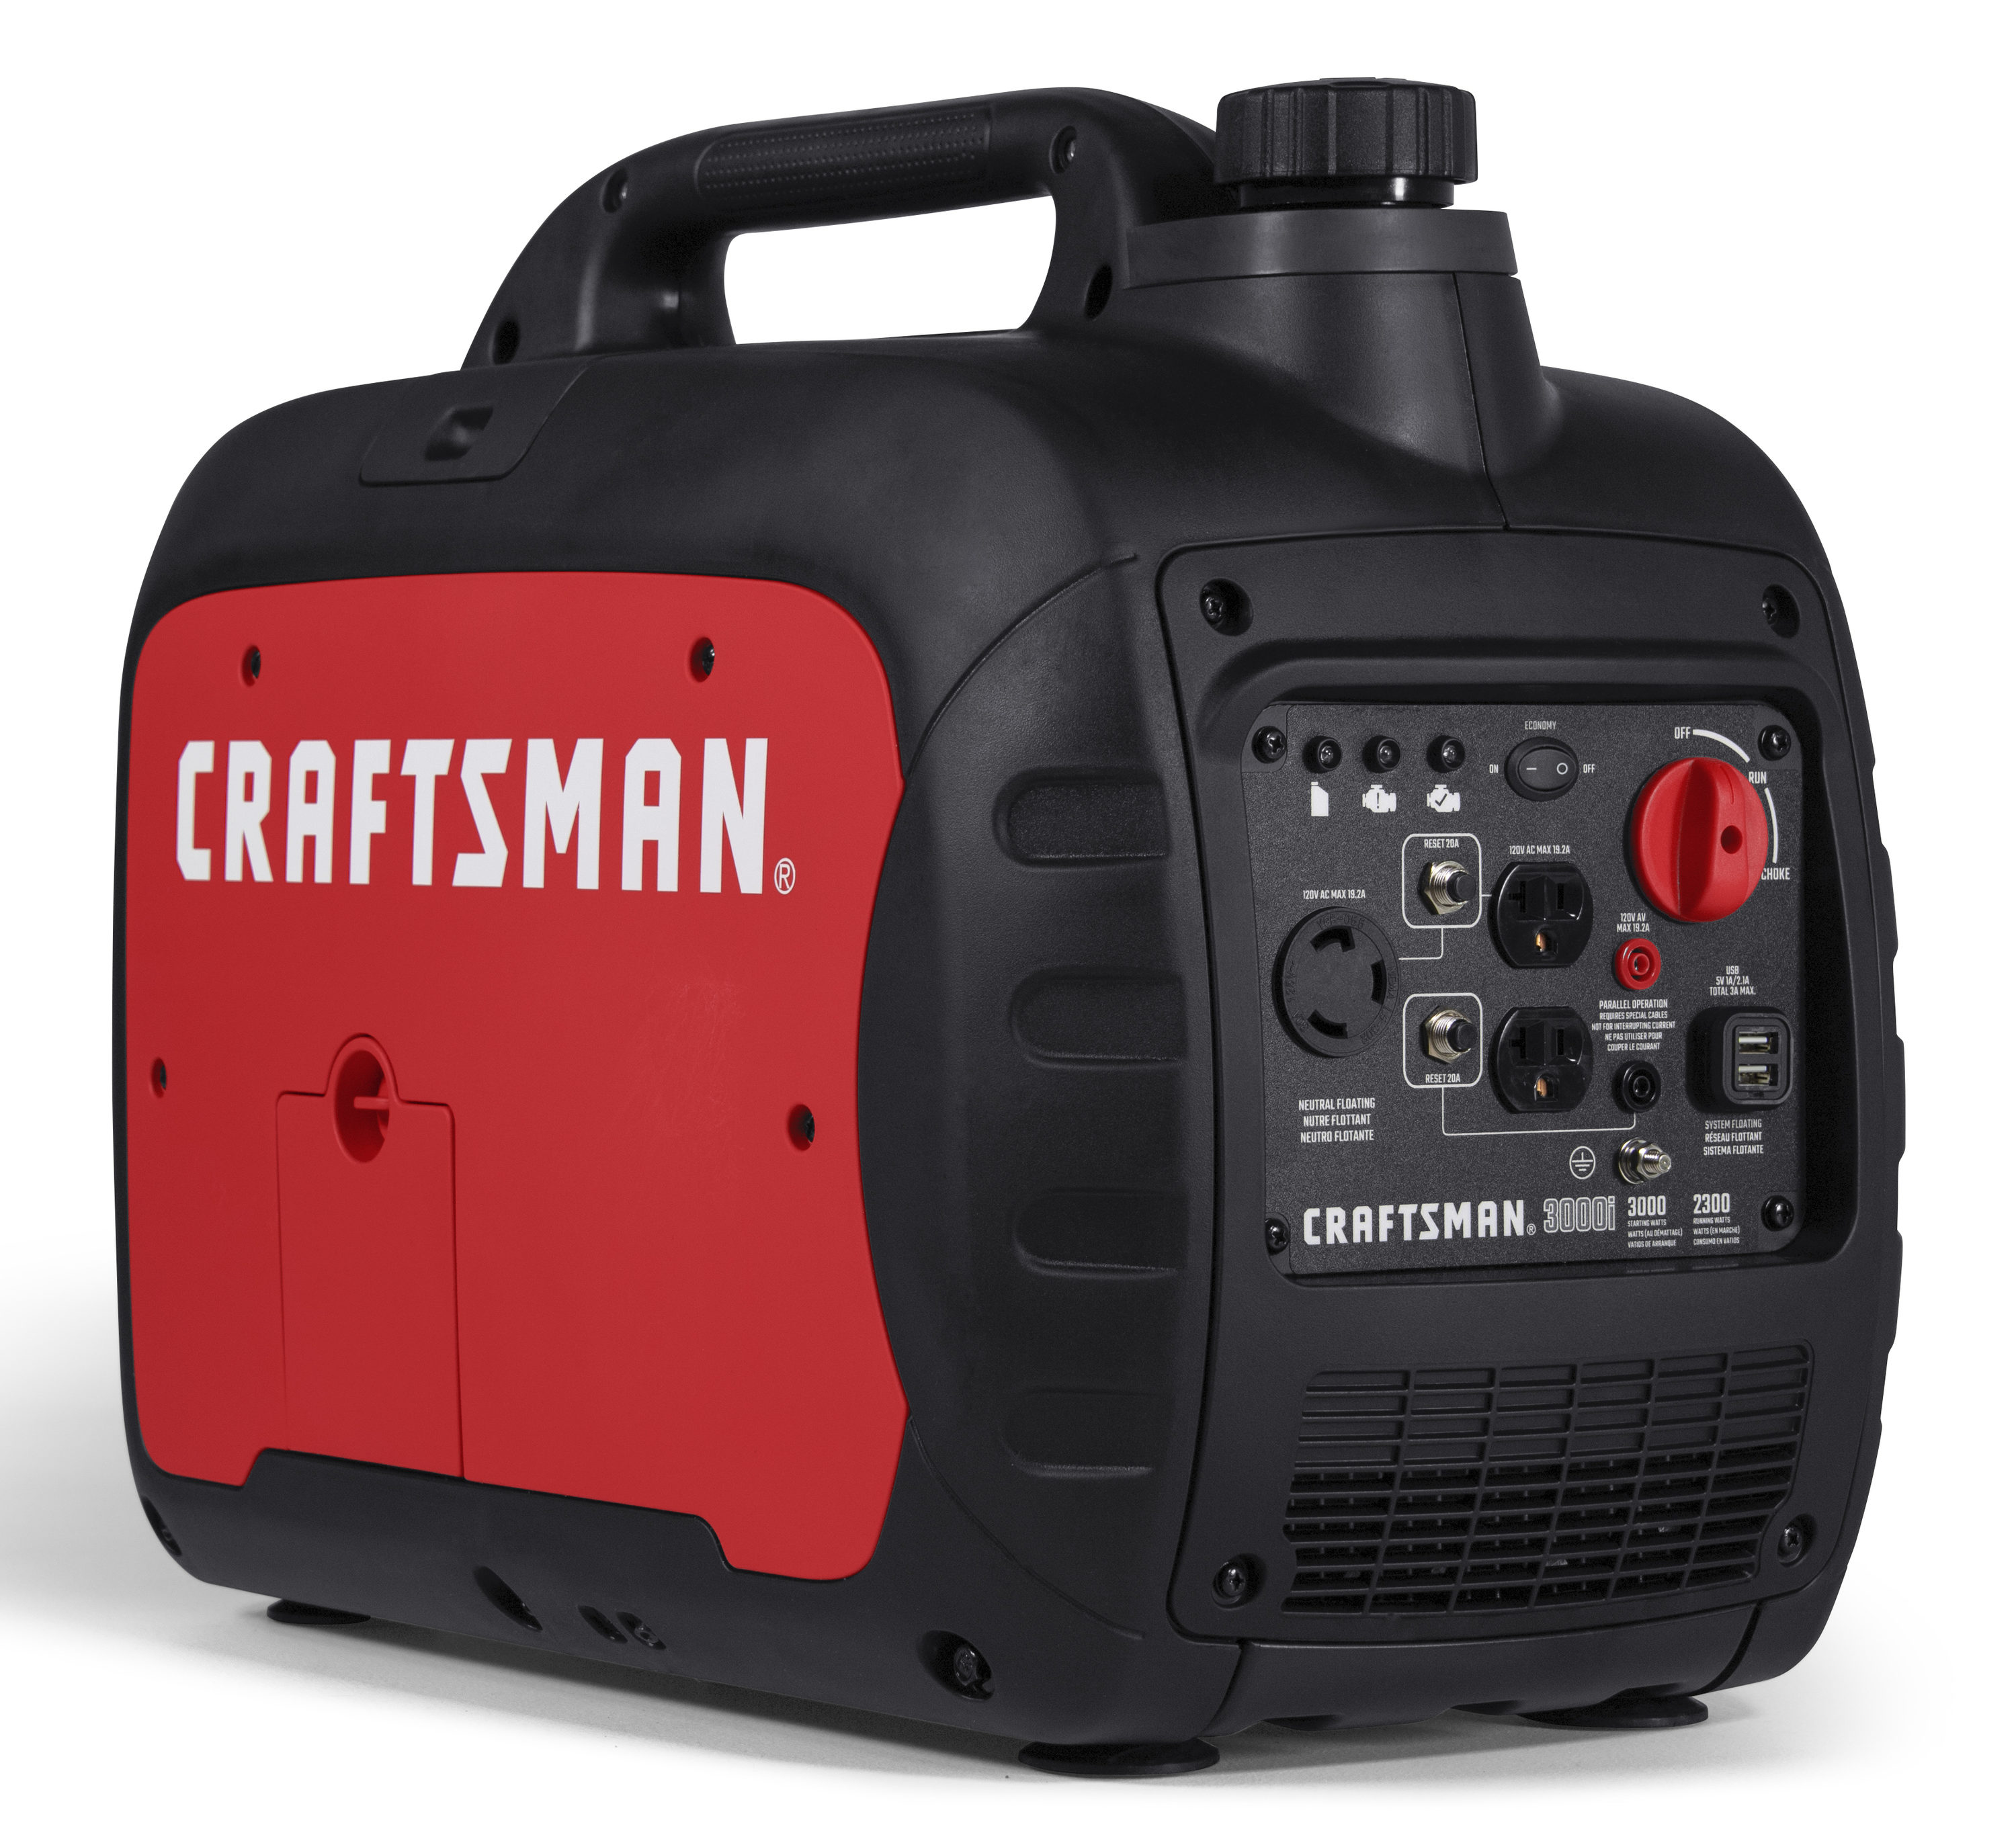 CRAFTSMAN 3000-Watt Gasoline Portable Inverter Lowes.com